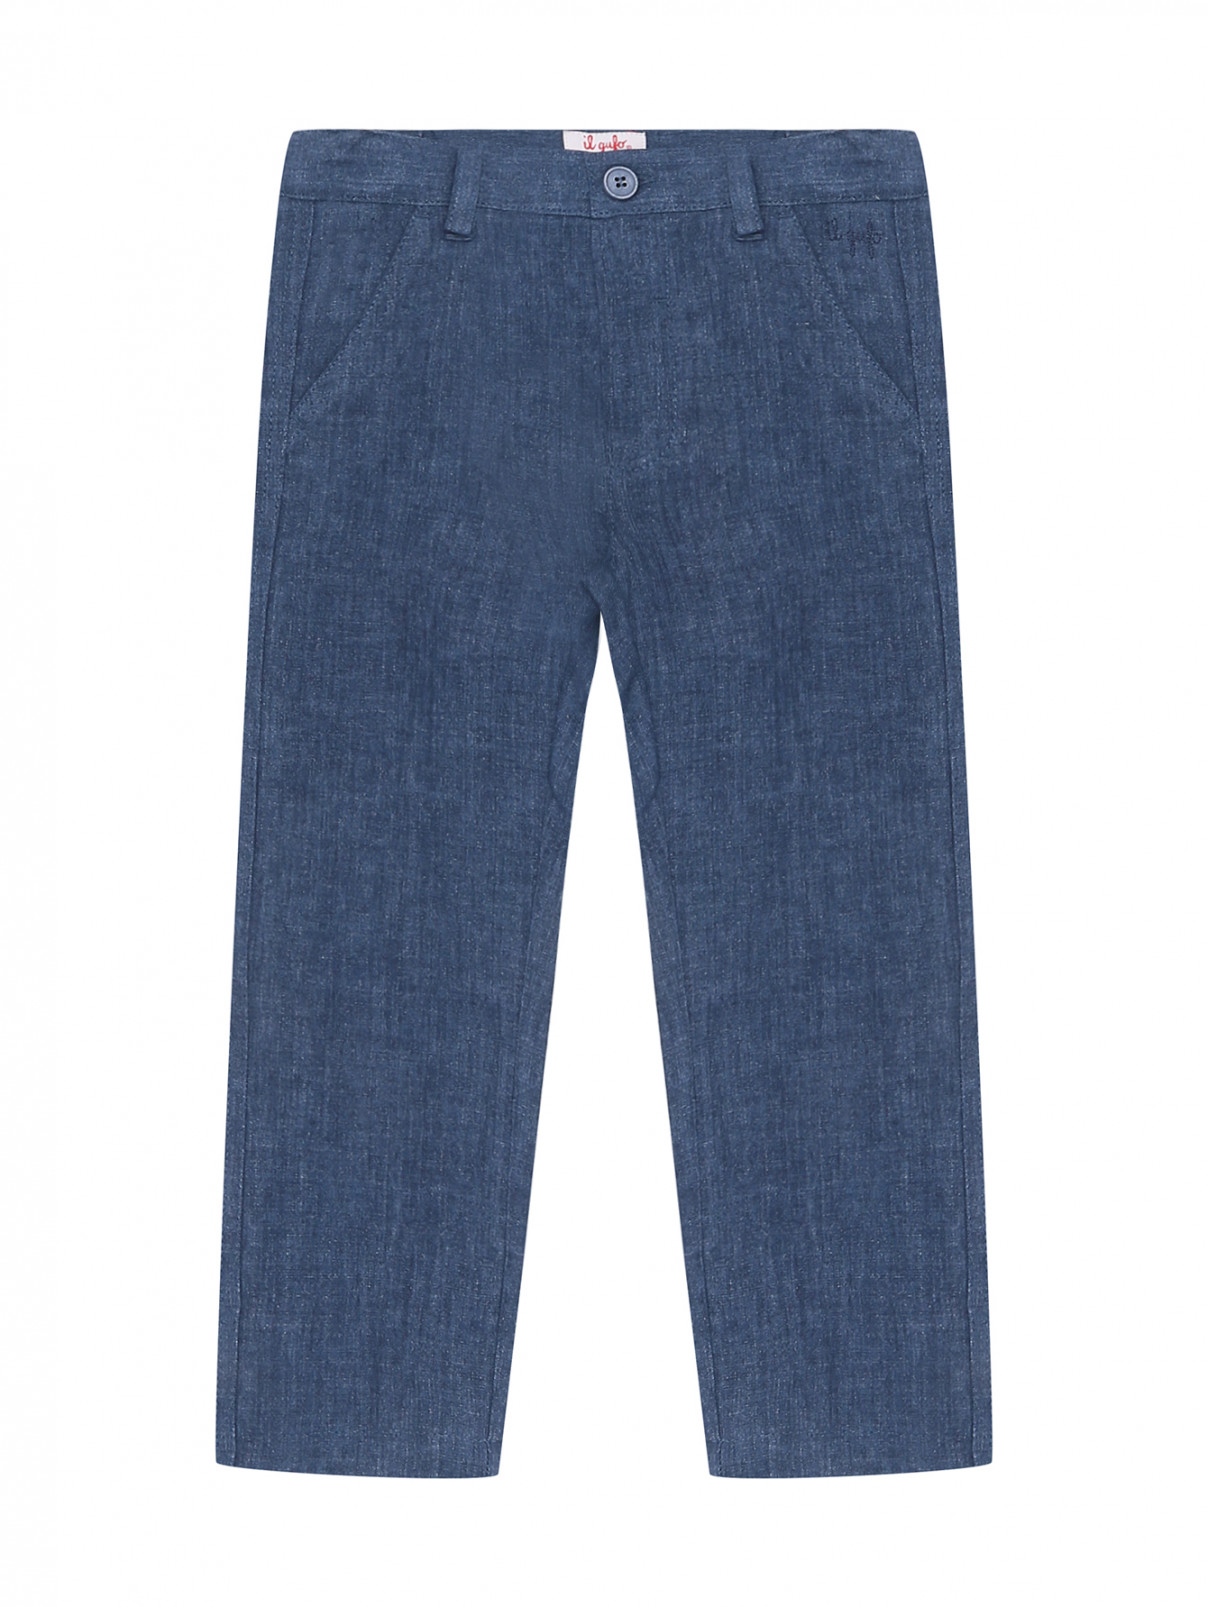 Однотонные брюки изо льна Il Gufo  –  Общий вид  – Цвет:  Синий